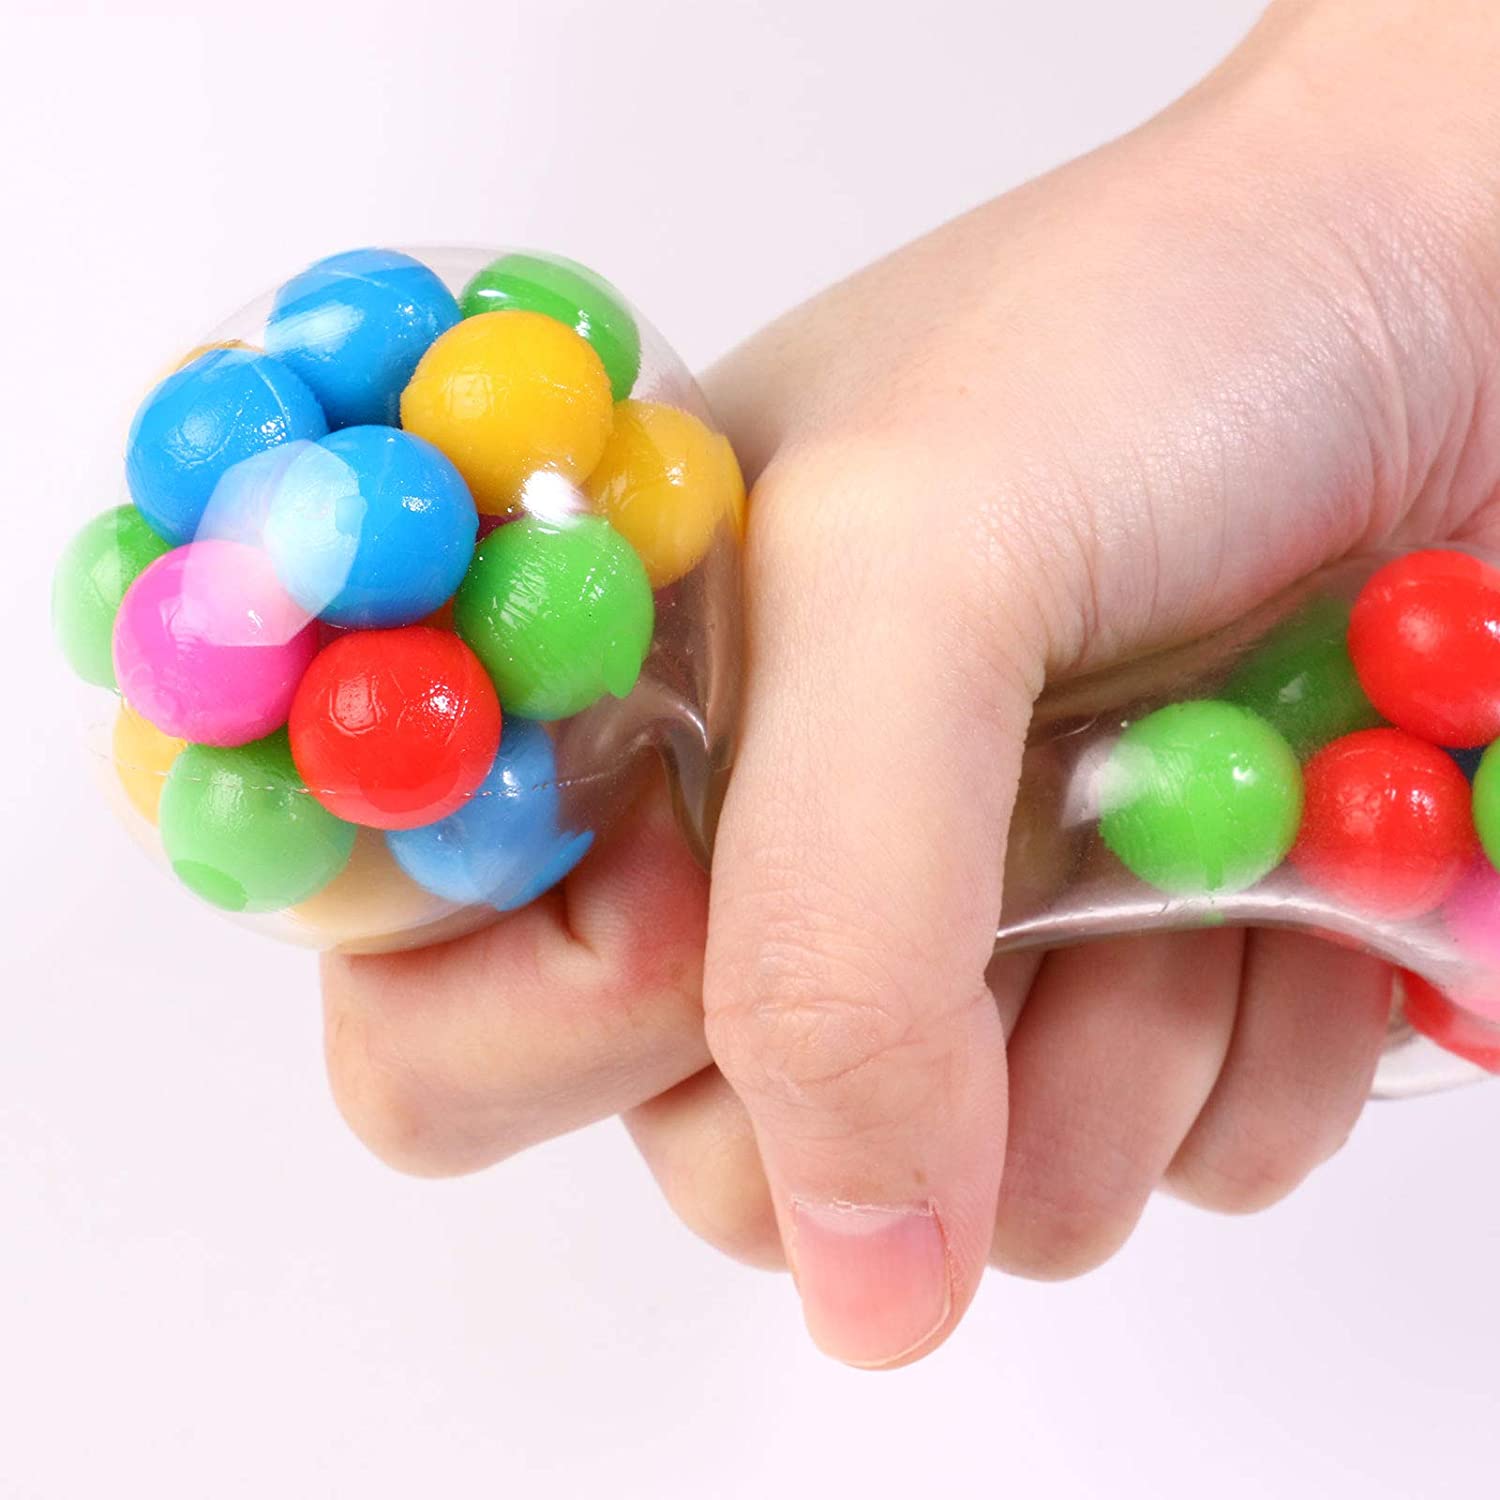 Fidget Key Chain Balls - Set of 3 Stress Ball Fidget Hand Strengthening Toy